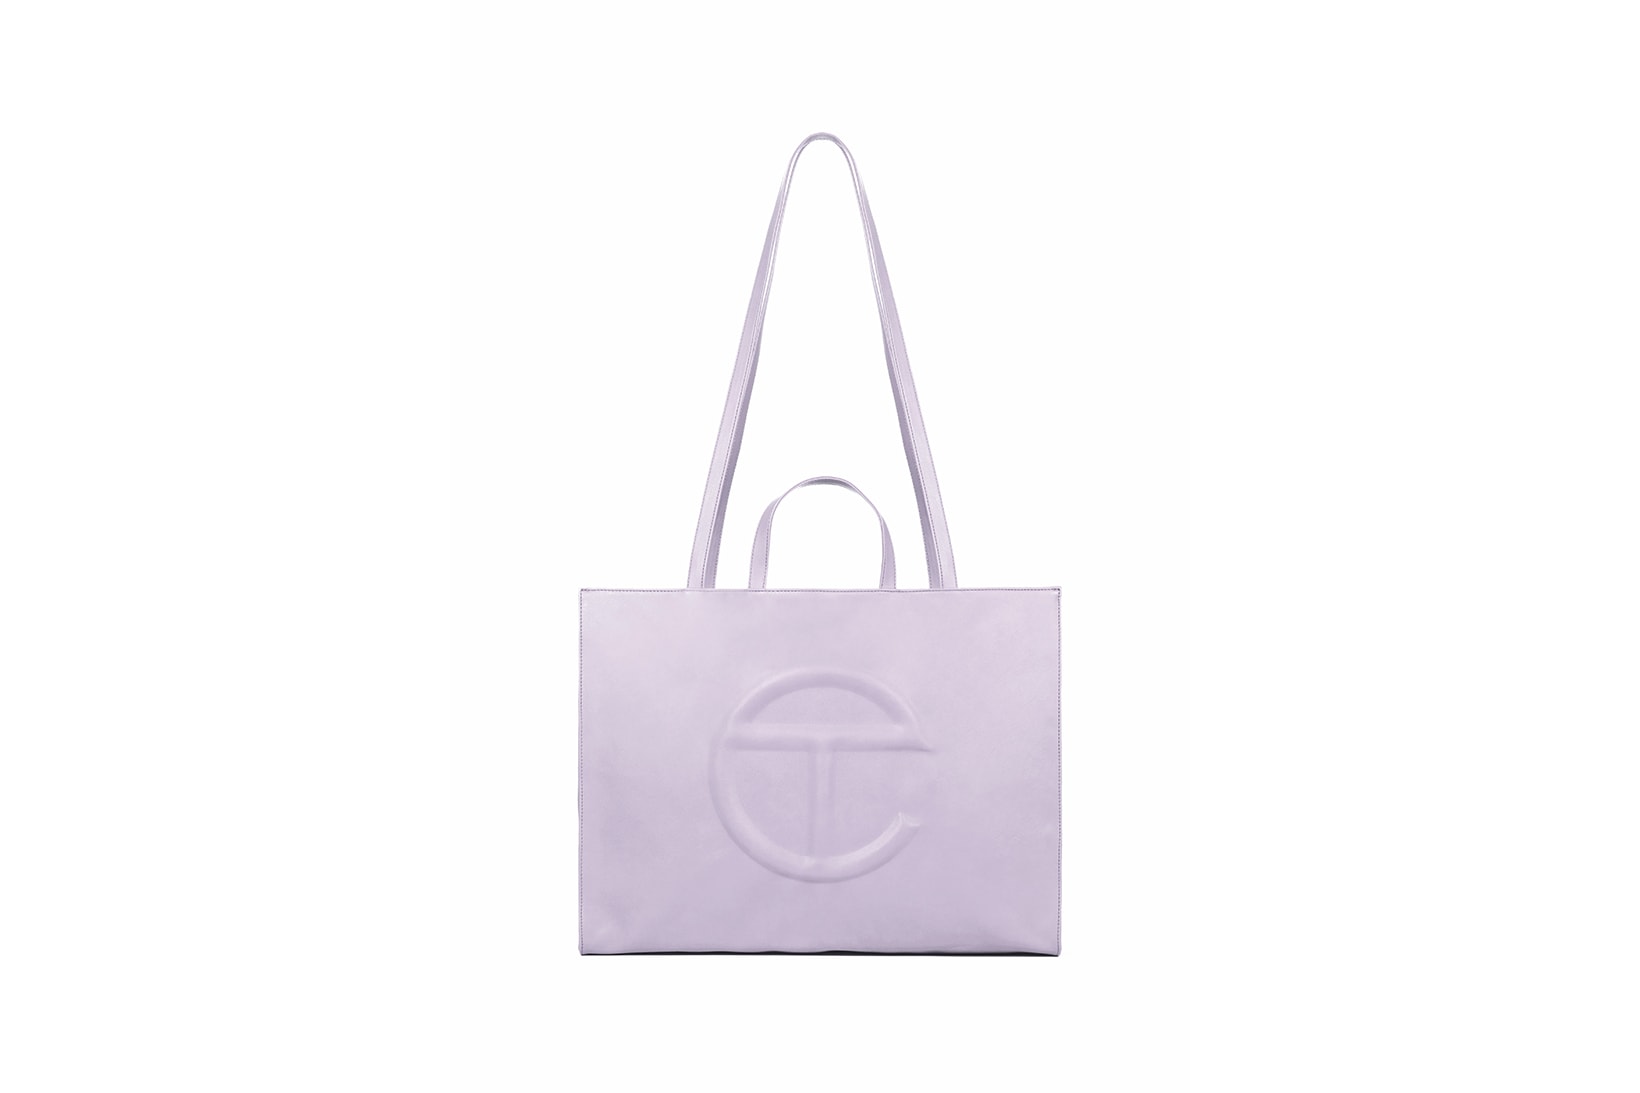 More than a fashion statement: the Telfar bag